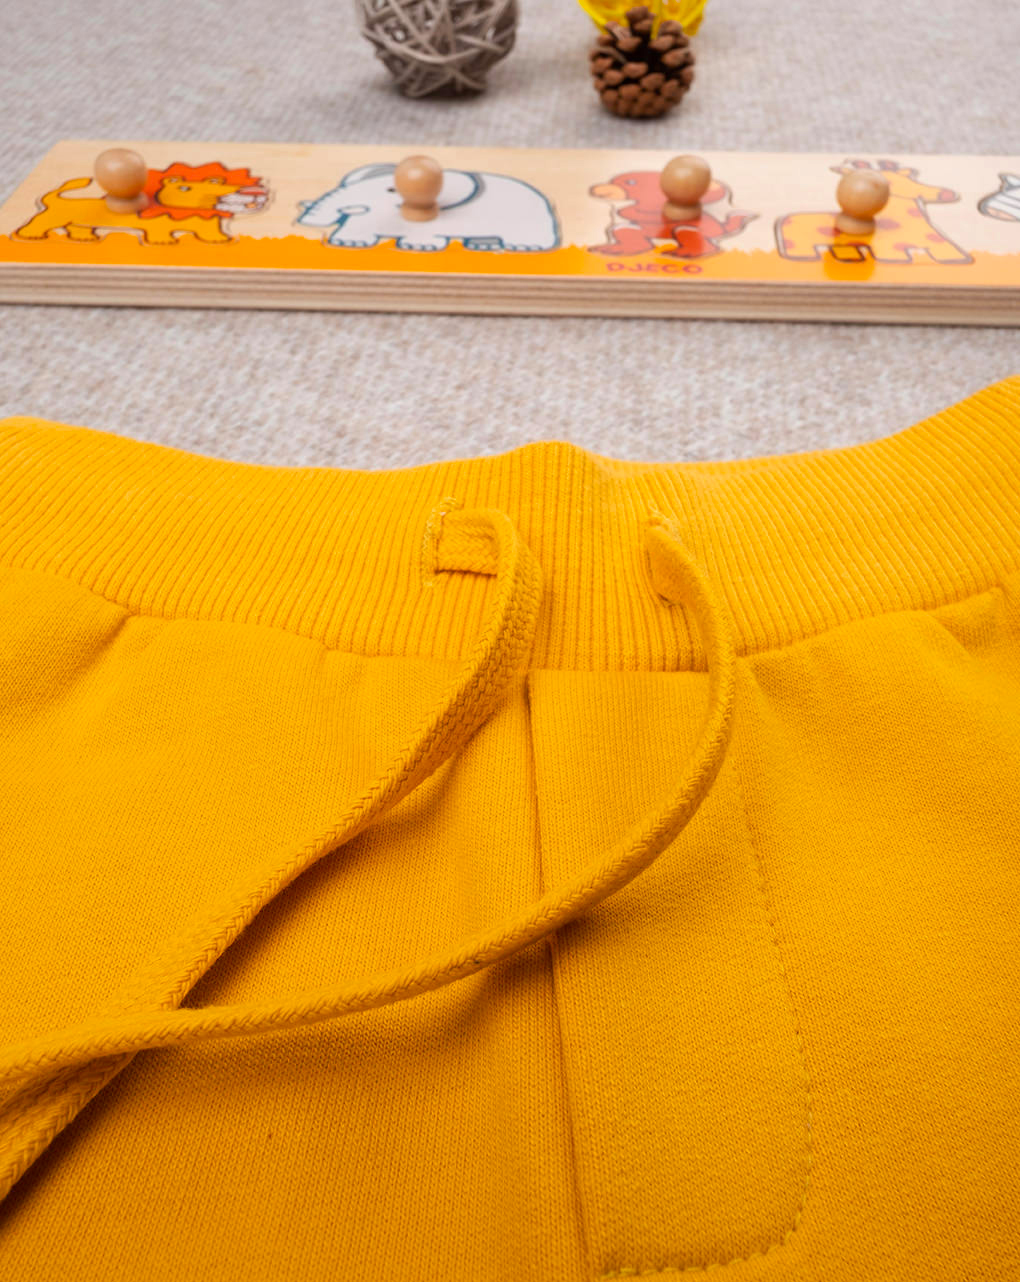 Pantalone french terry bimbo giallo - Prénatal